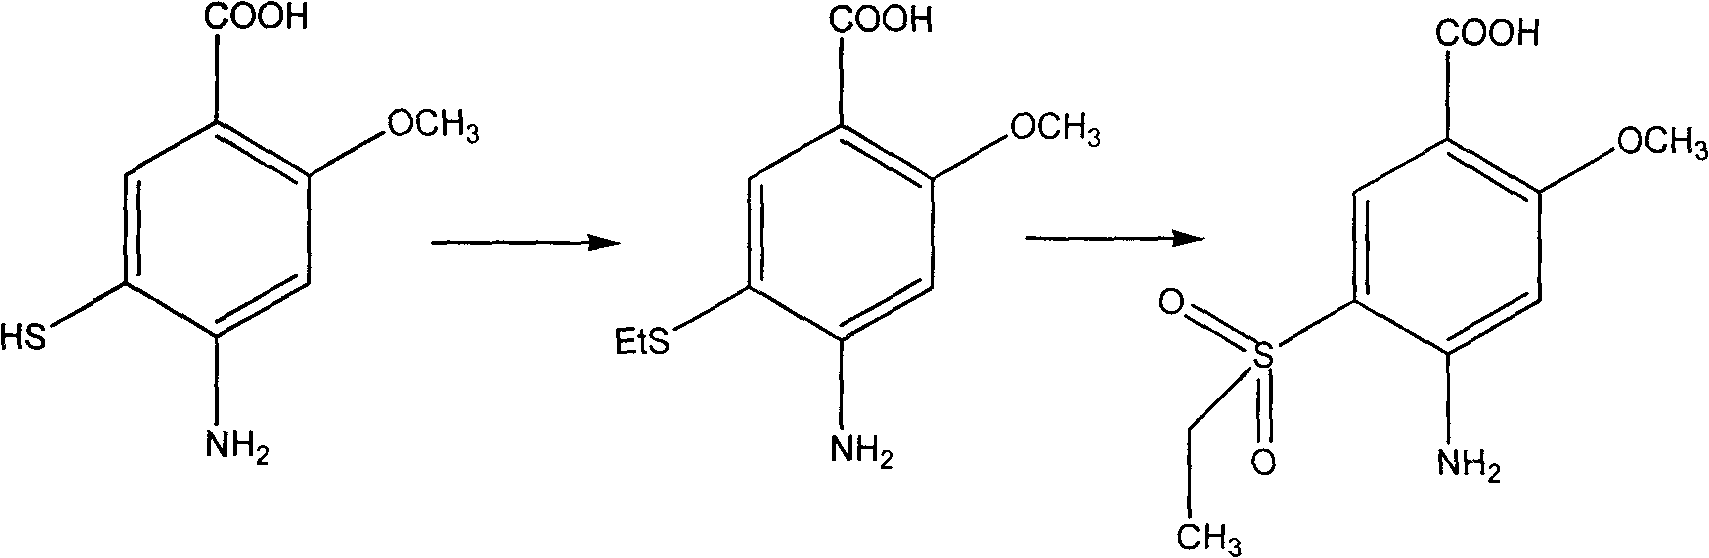 Synthesis method for 2- methoxyl-4-amino-5-ethylsulfonylbenzoic acid